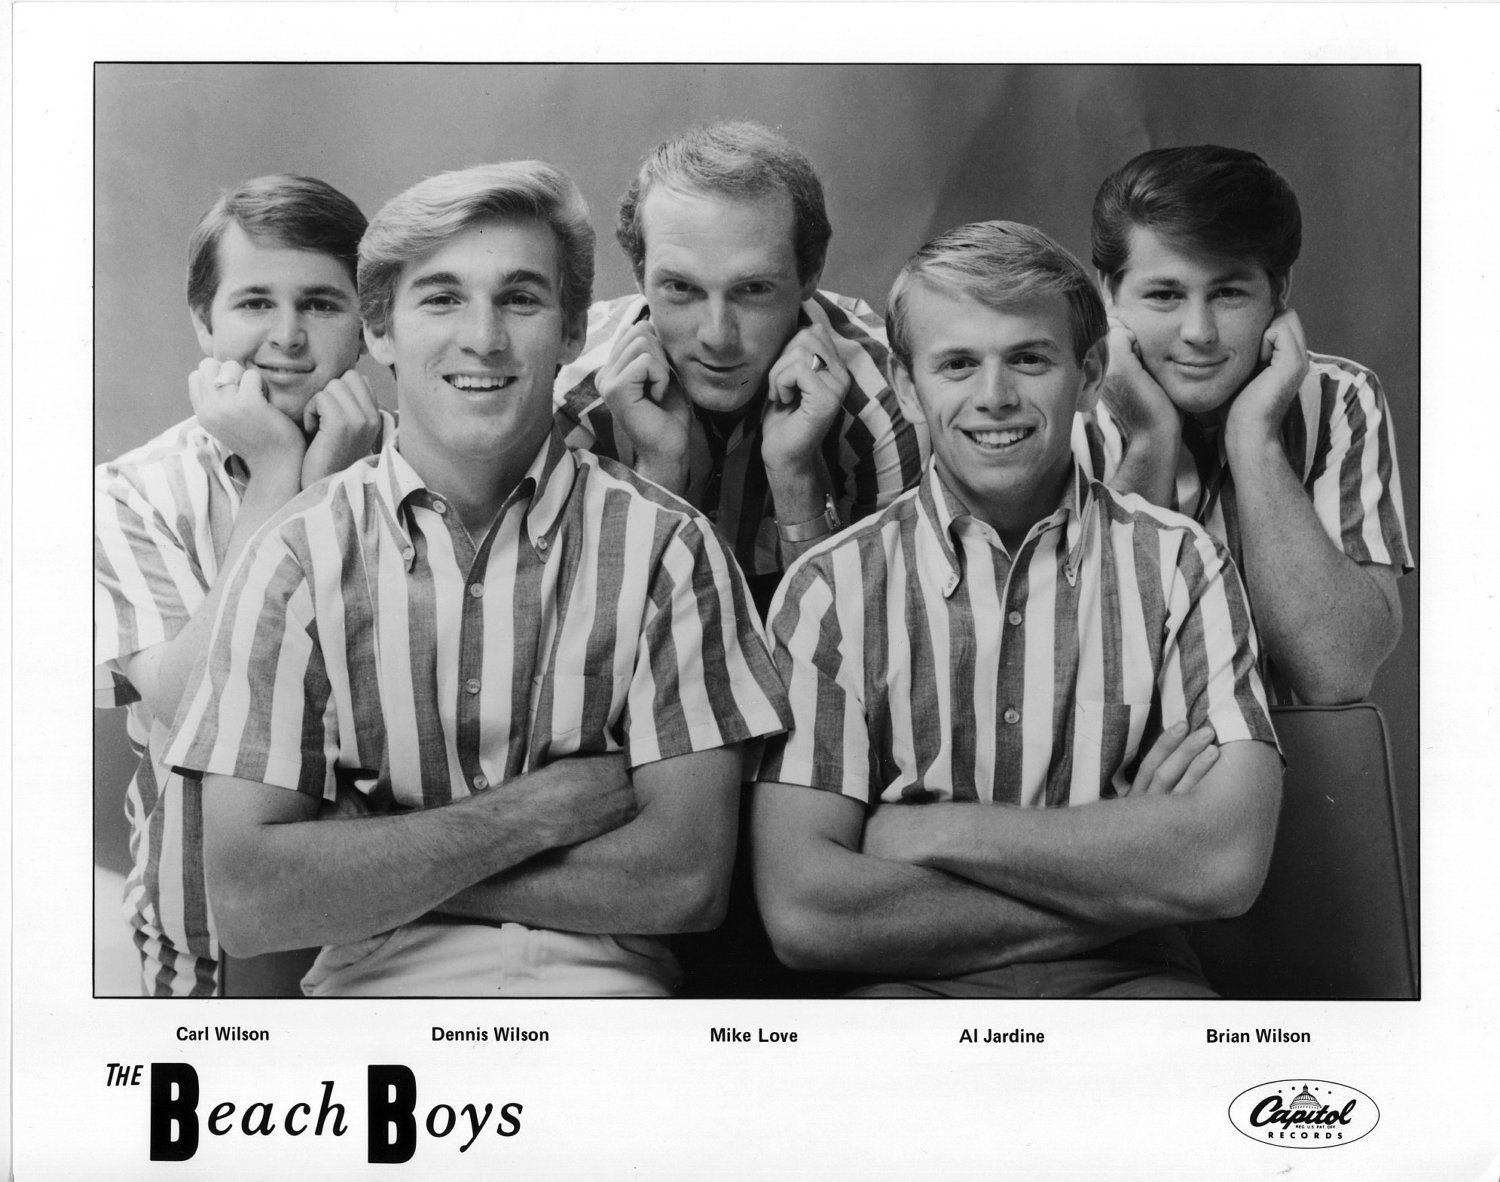 The Beach Boys Wallpaper. Beautiful